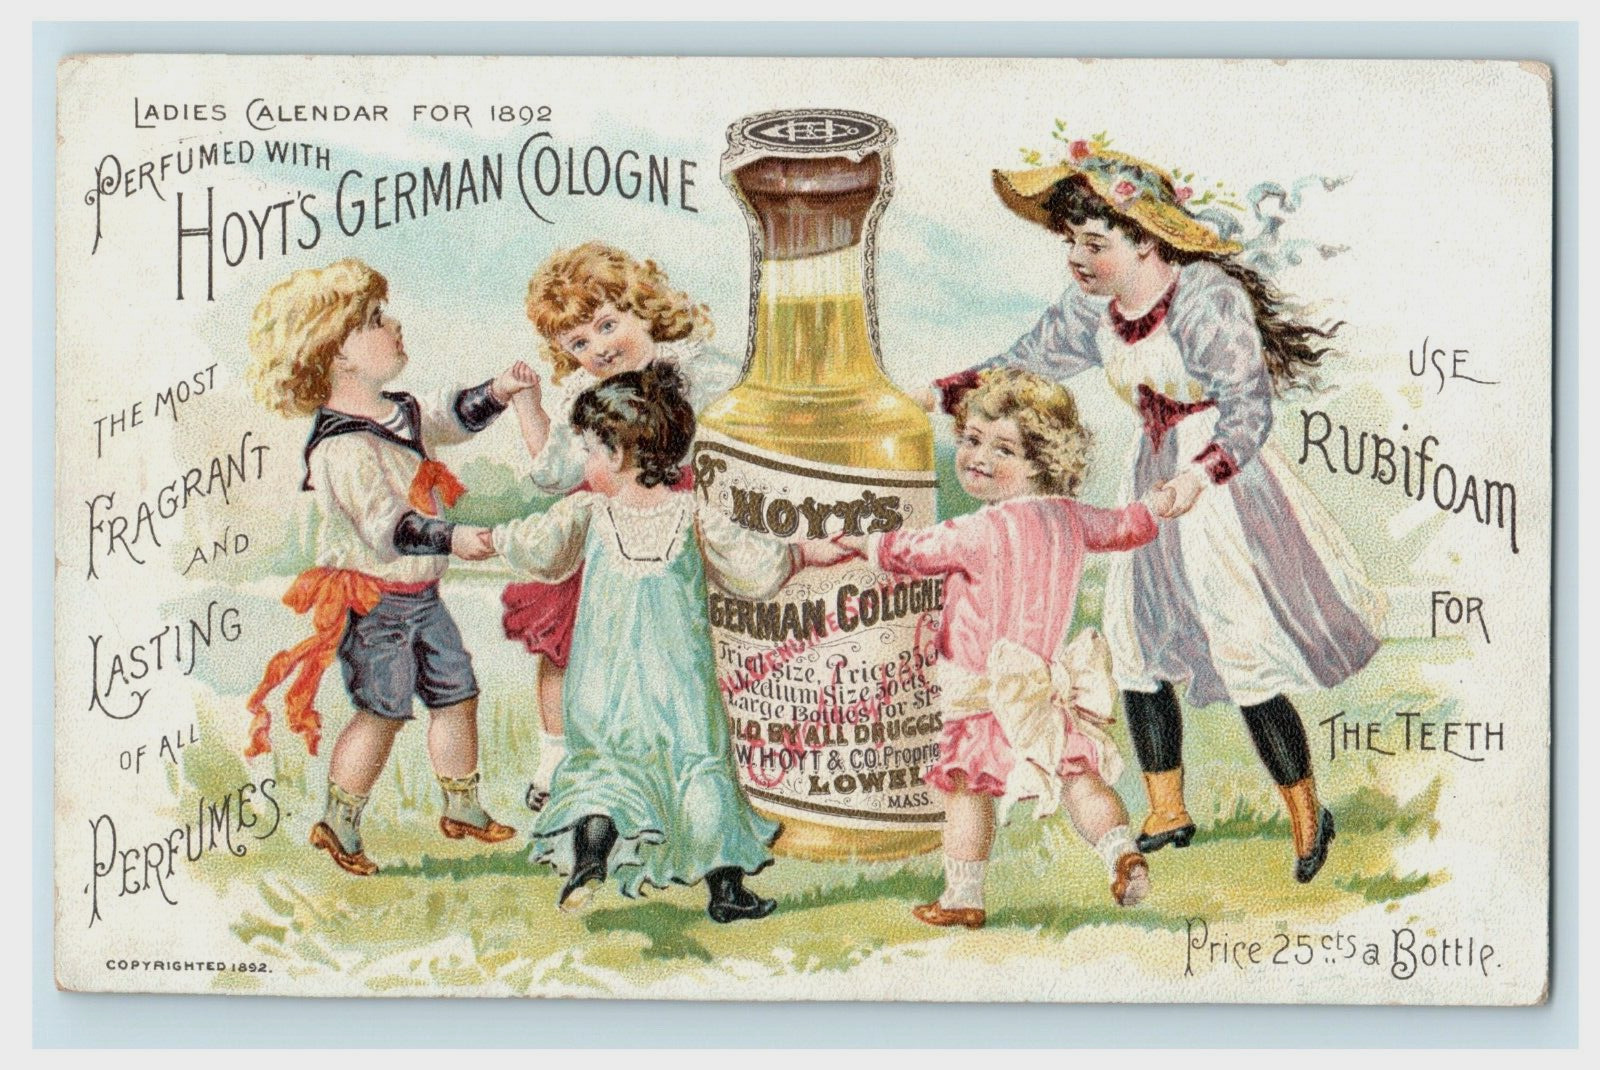 Hoyts German Cologne - Ladies Calendar 1892 Lowe l MA - Children Fantasy Bottle